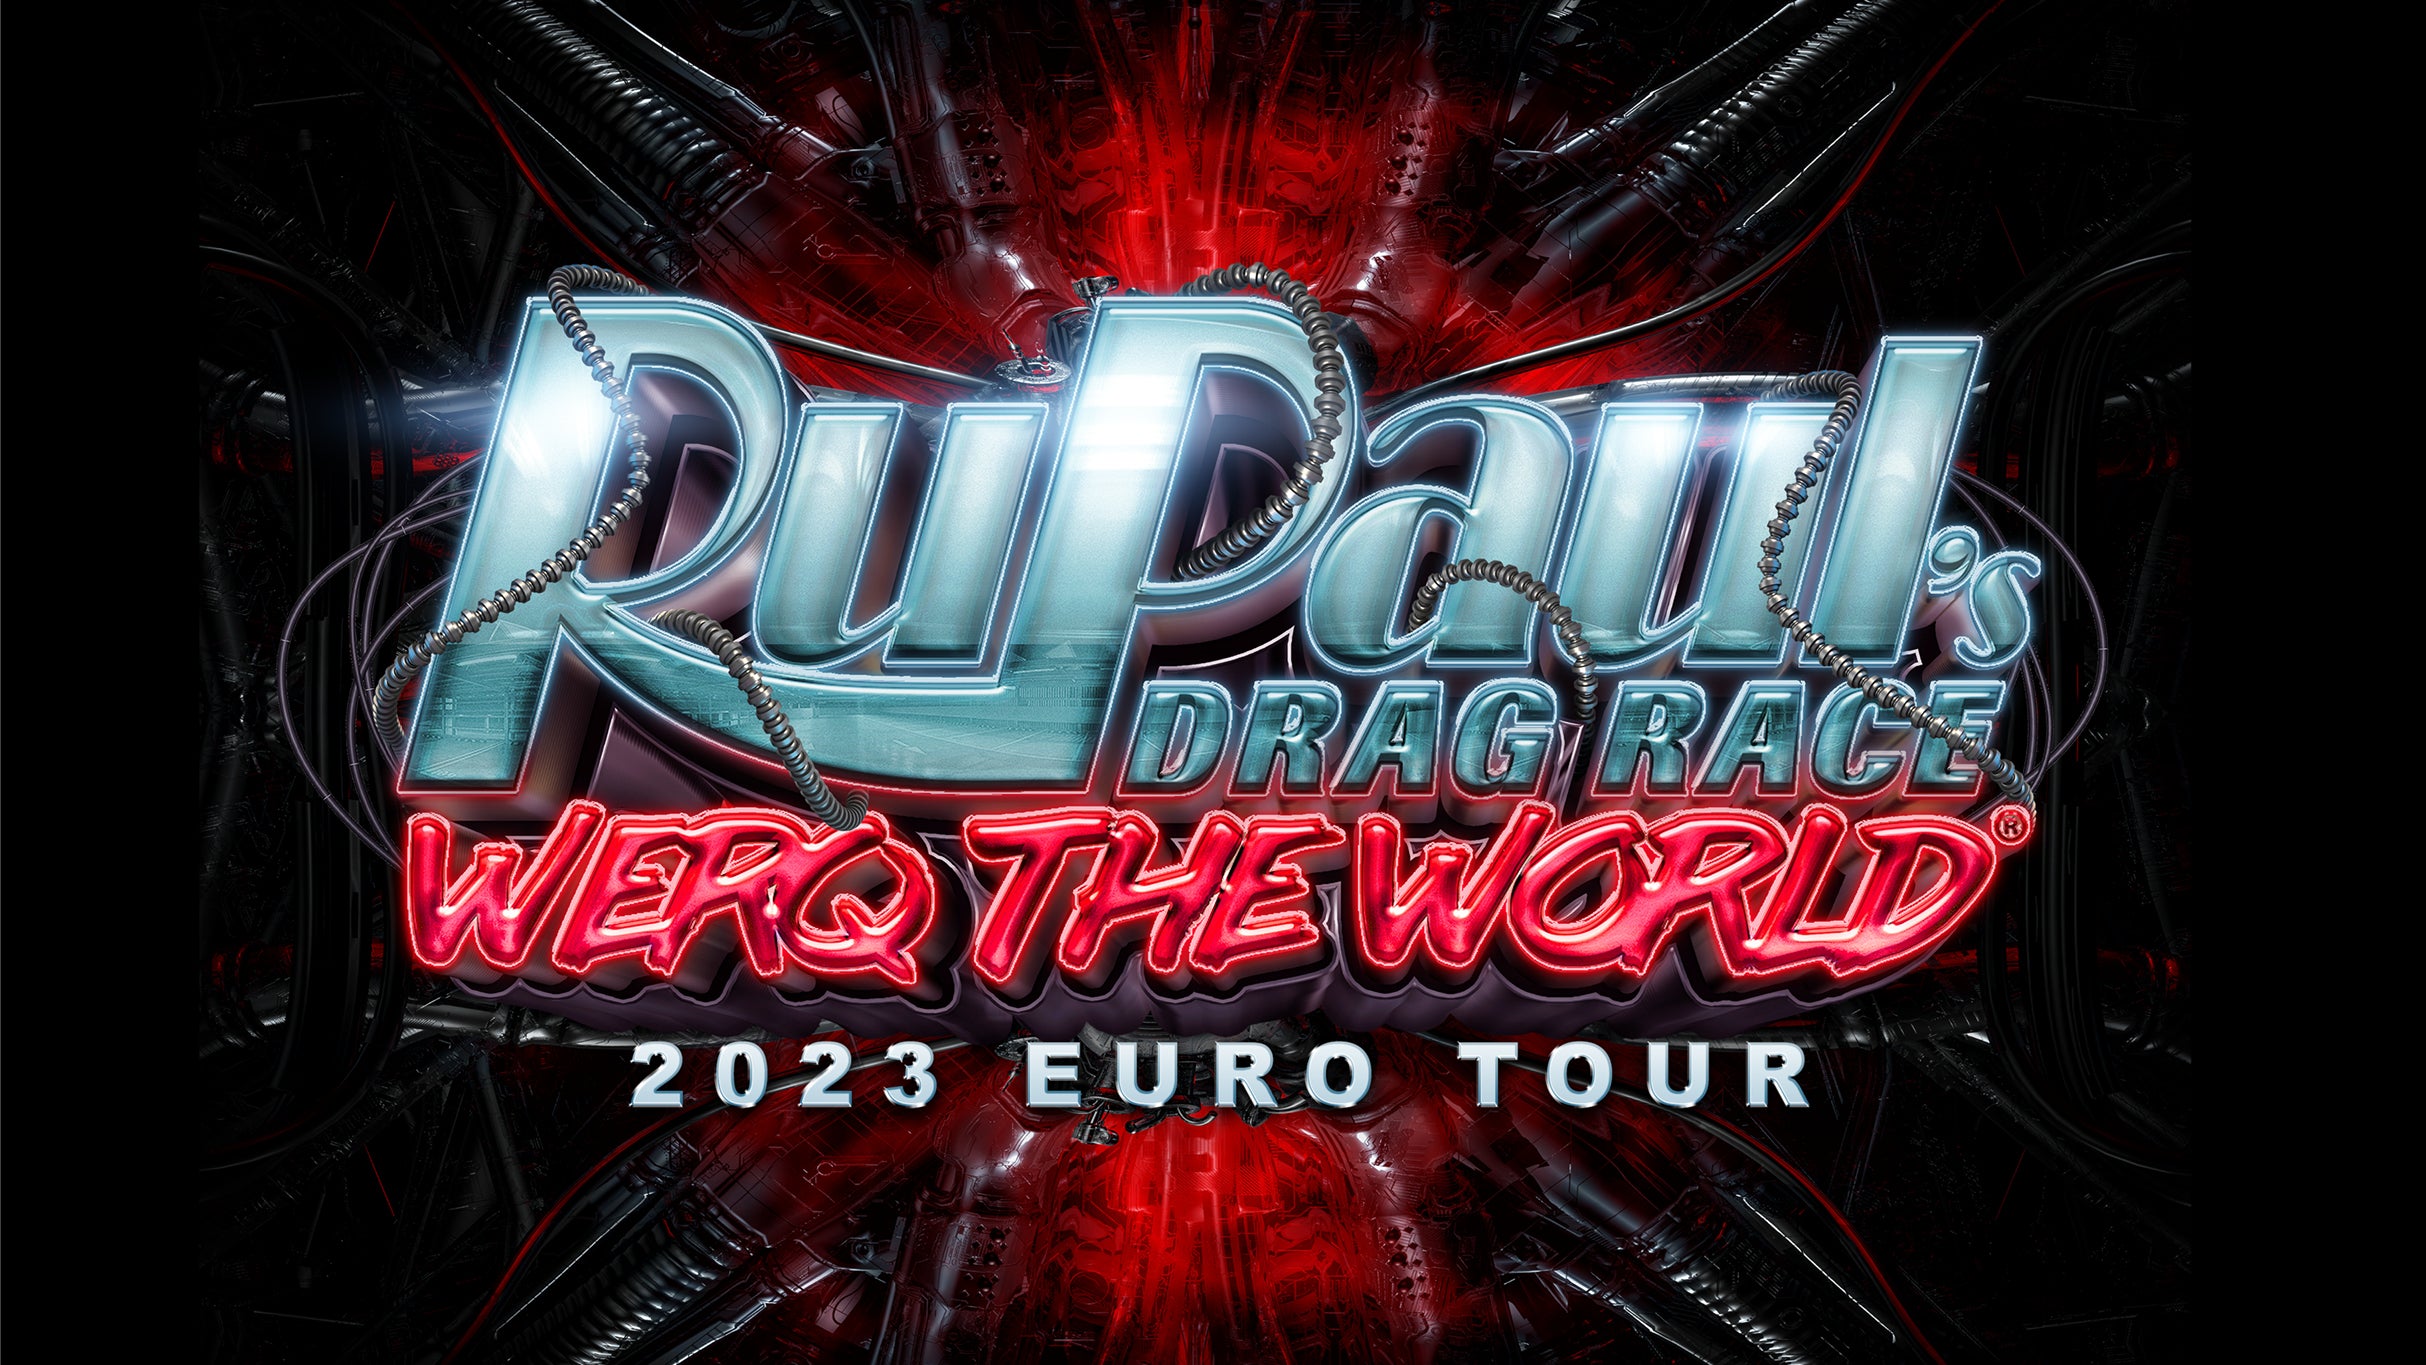 RuPaul’s Drag Race Werq the World Tour 2023